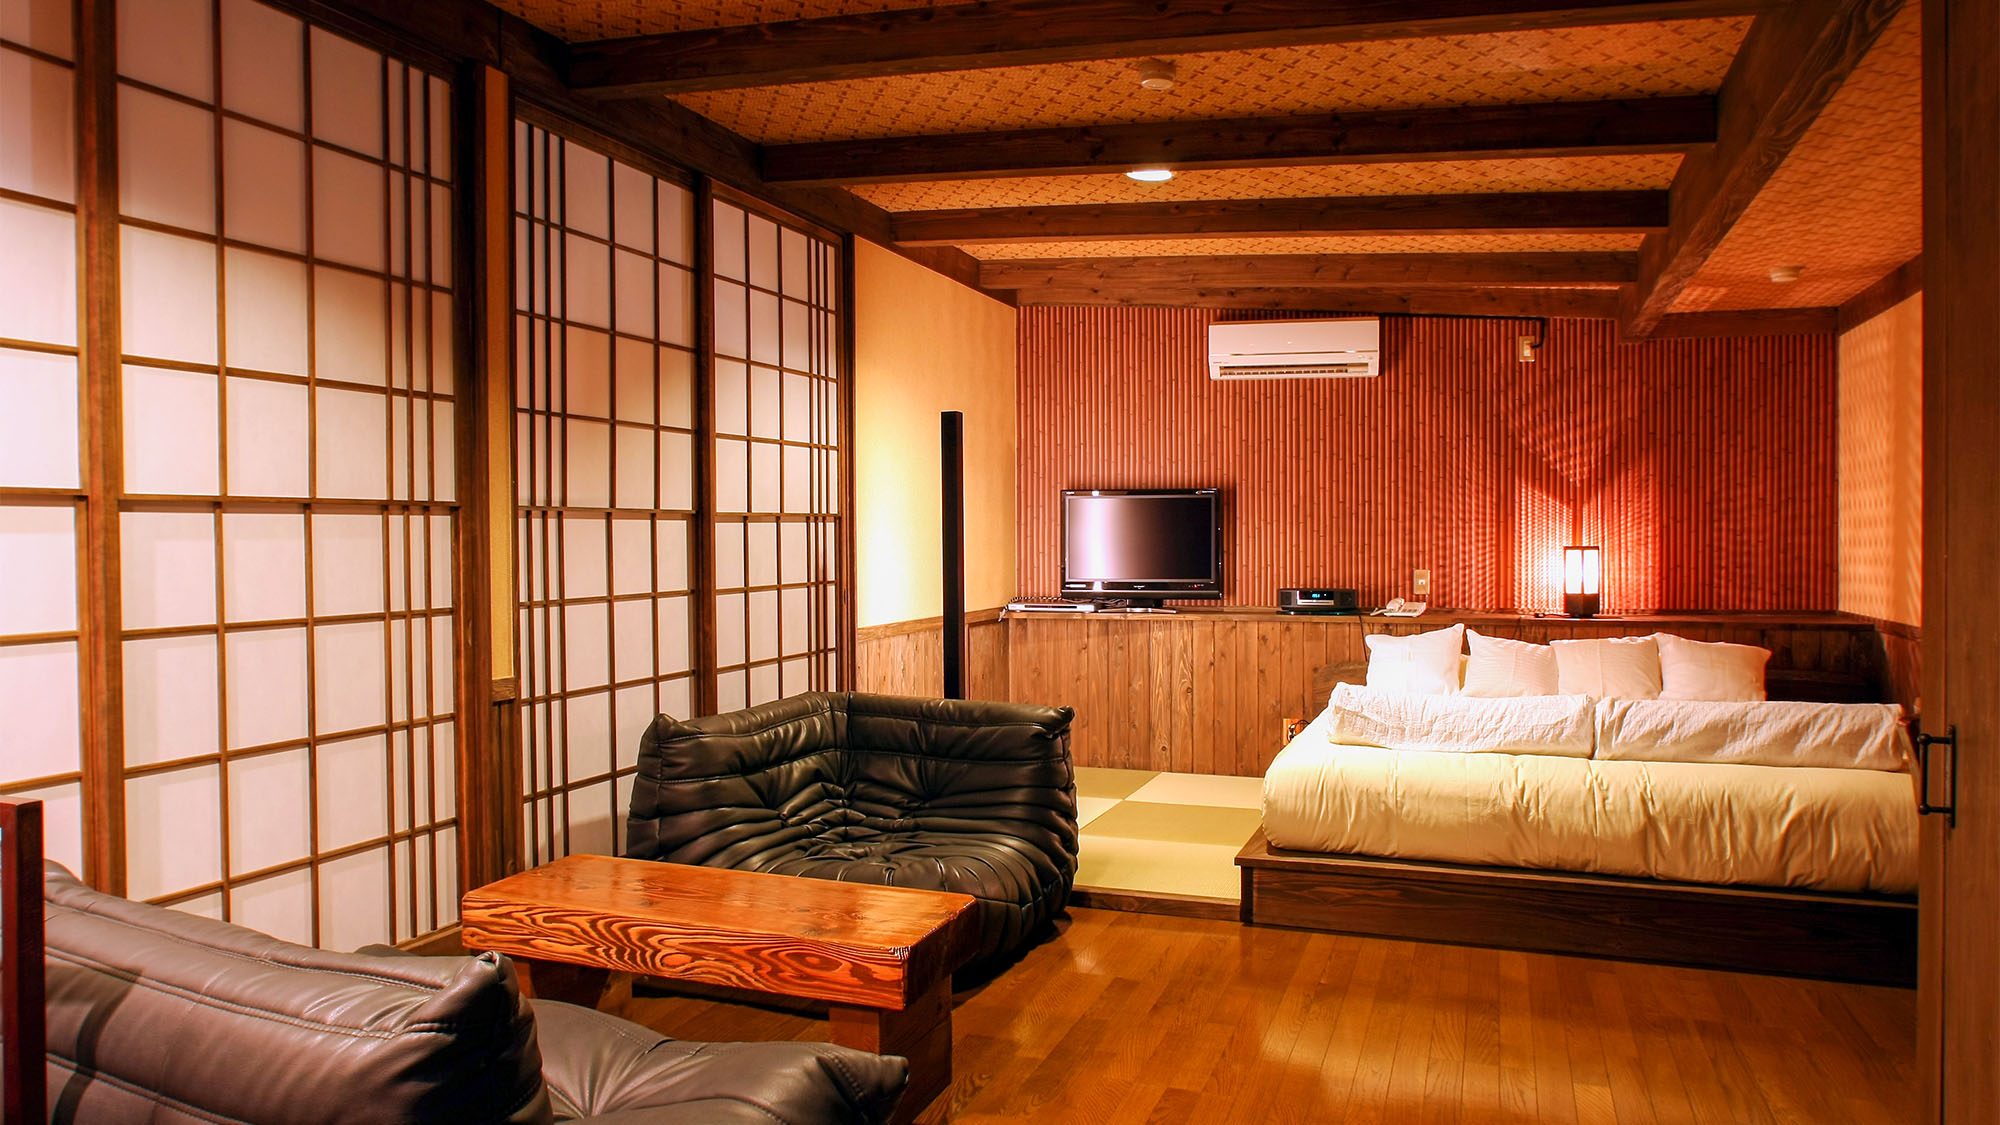 ・【YAMABATO】ソファスペースや畳のスペースもある贅沢なお部屋です